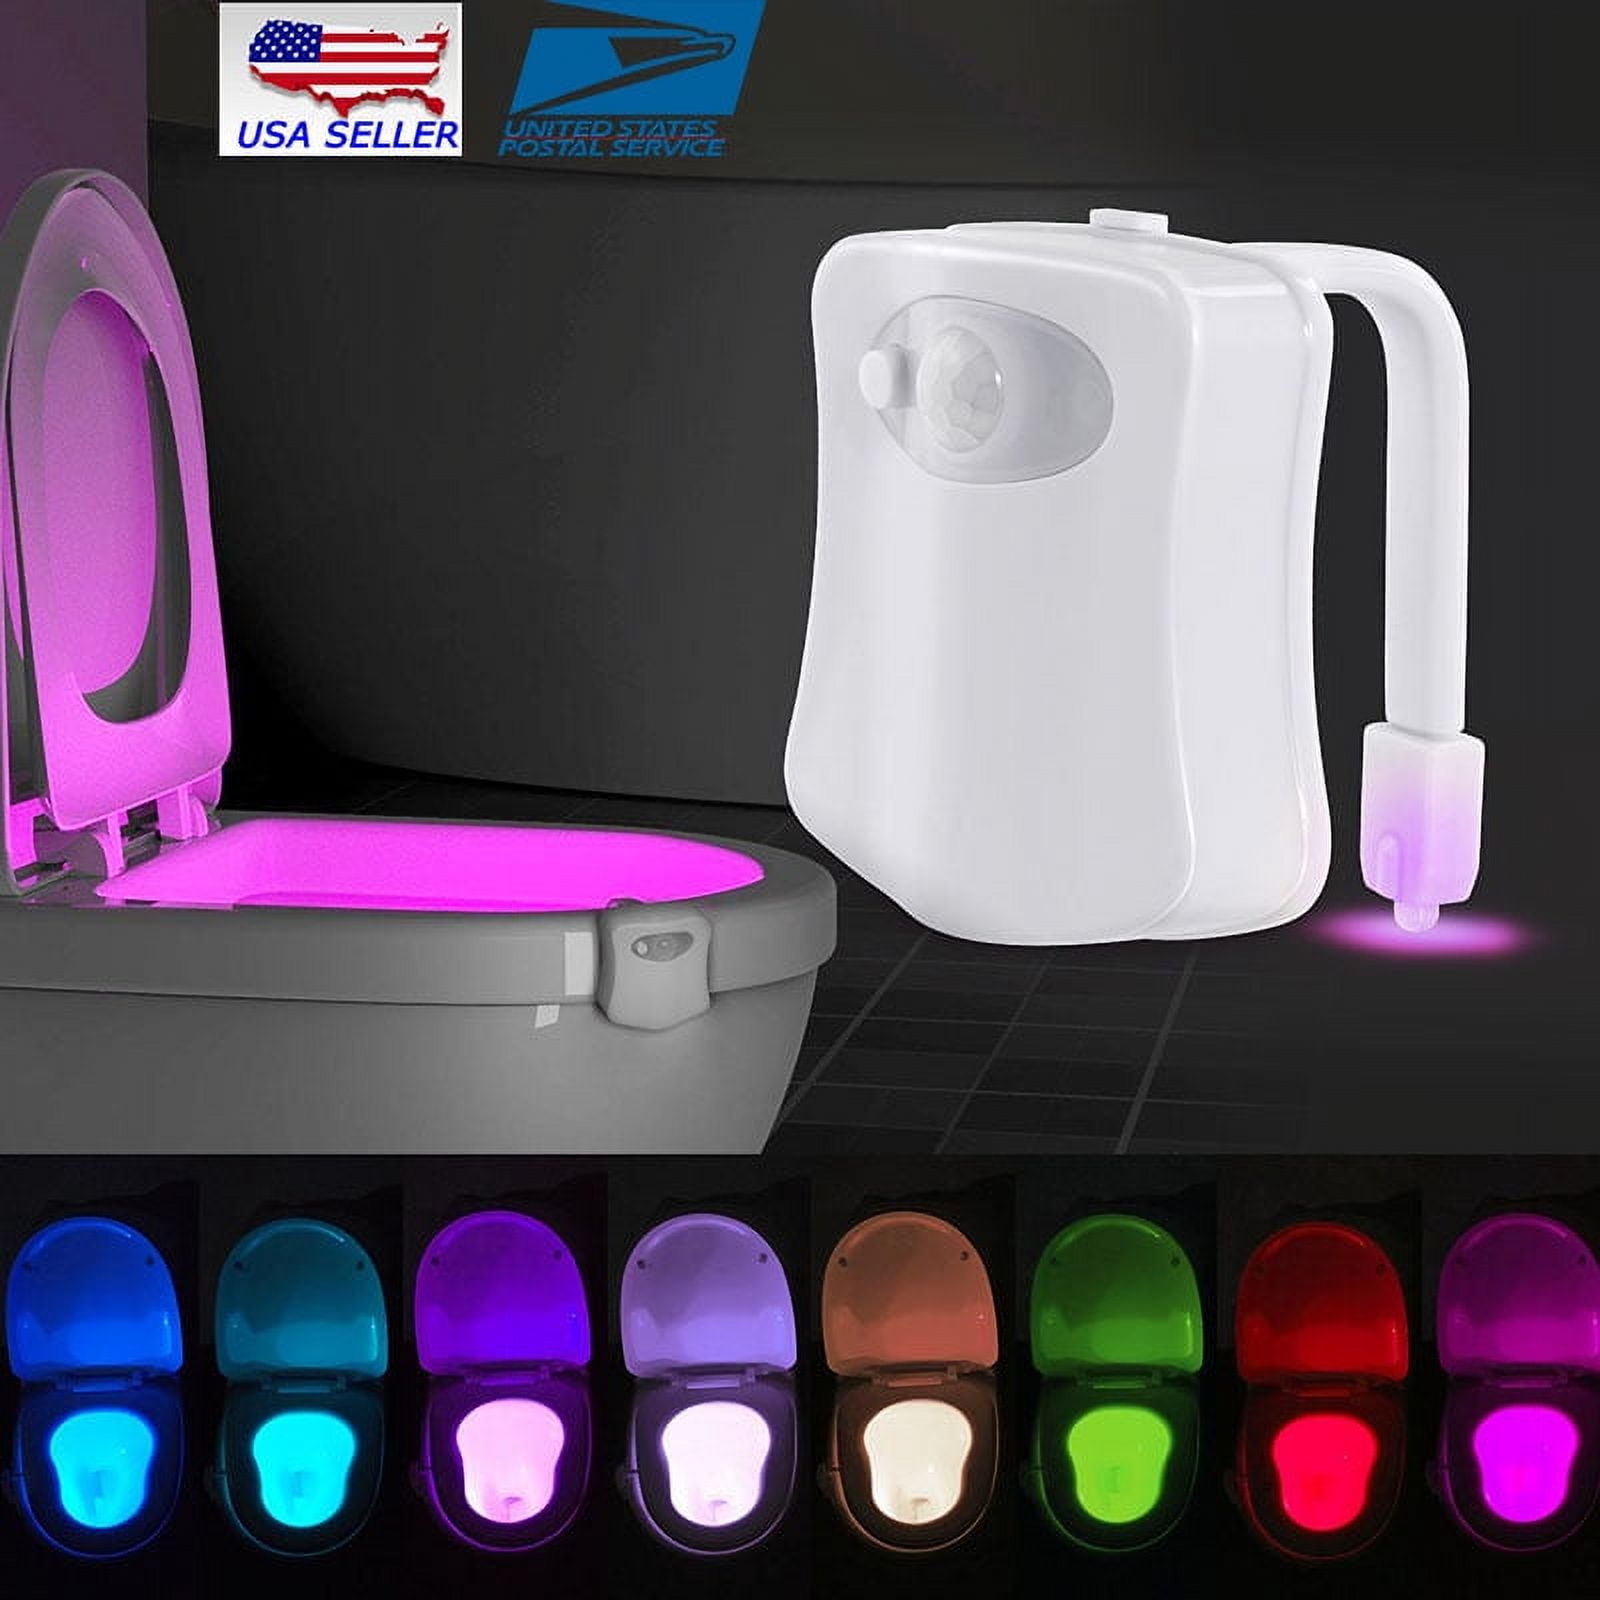 Toilet Light Motion Sensor 2Pack, iBetterLife The Original LED 8 Colors  Toilet Bowl Night Light - Un…See more Toilet Light Motion Sensor 2Pack